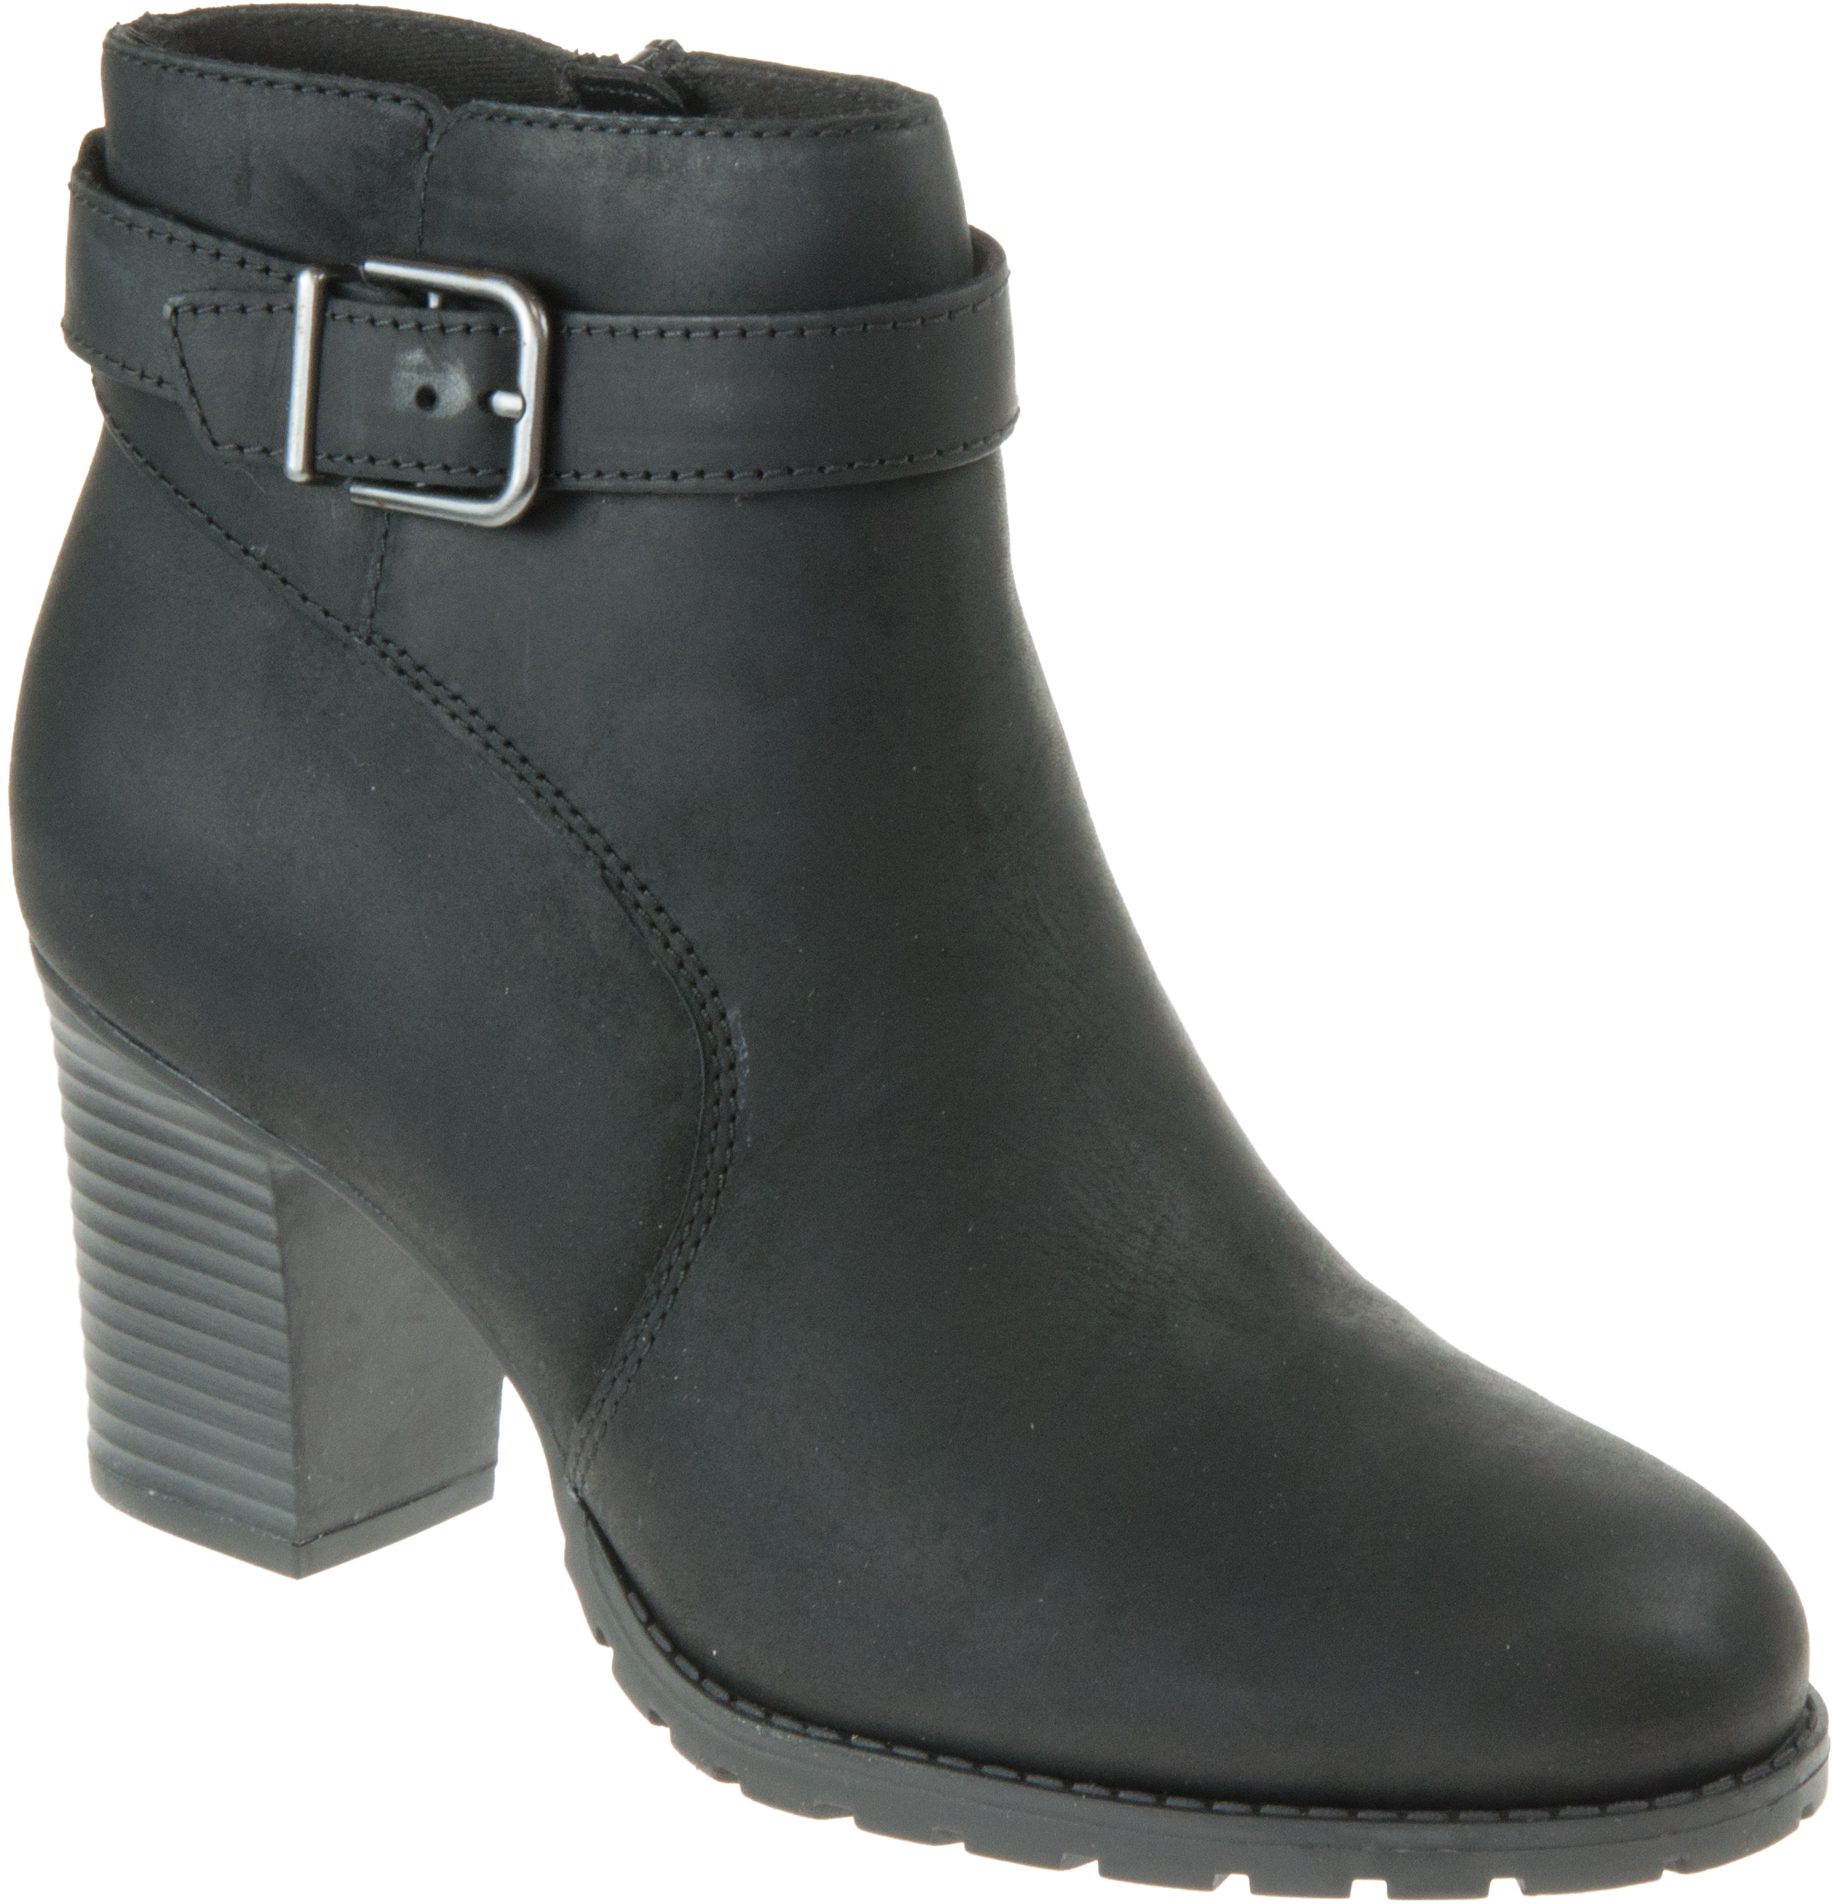 Clarks Verona Lark Black Leather 26153426 - Ankle Boots - Humphries Shoes